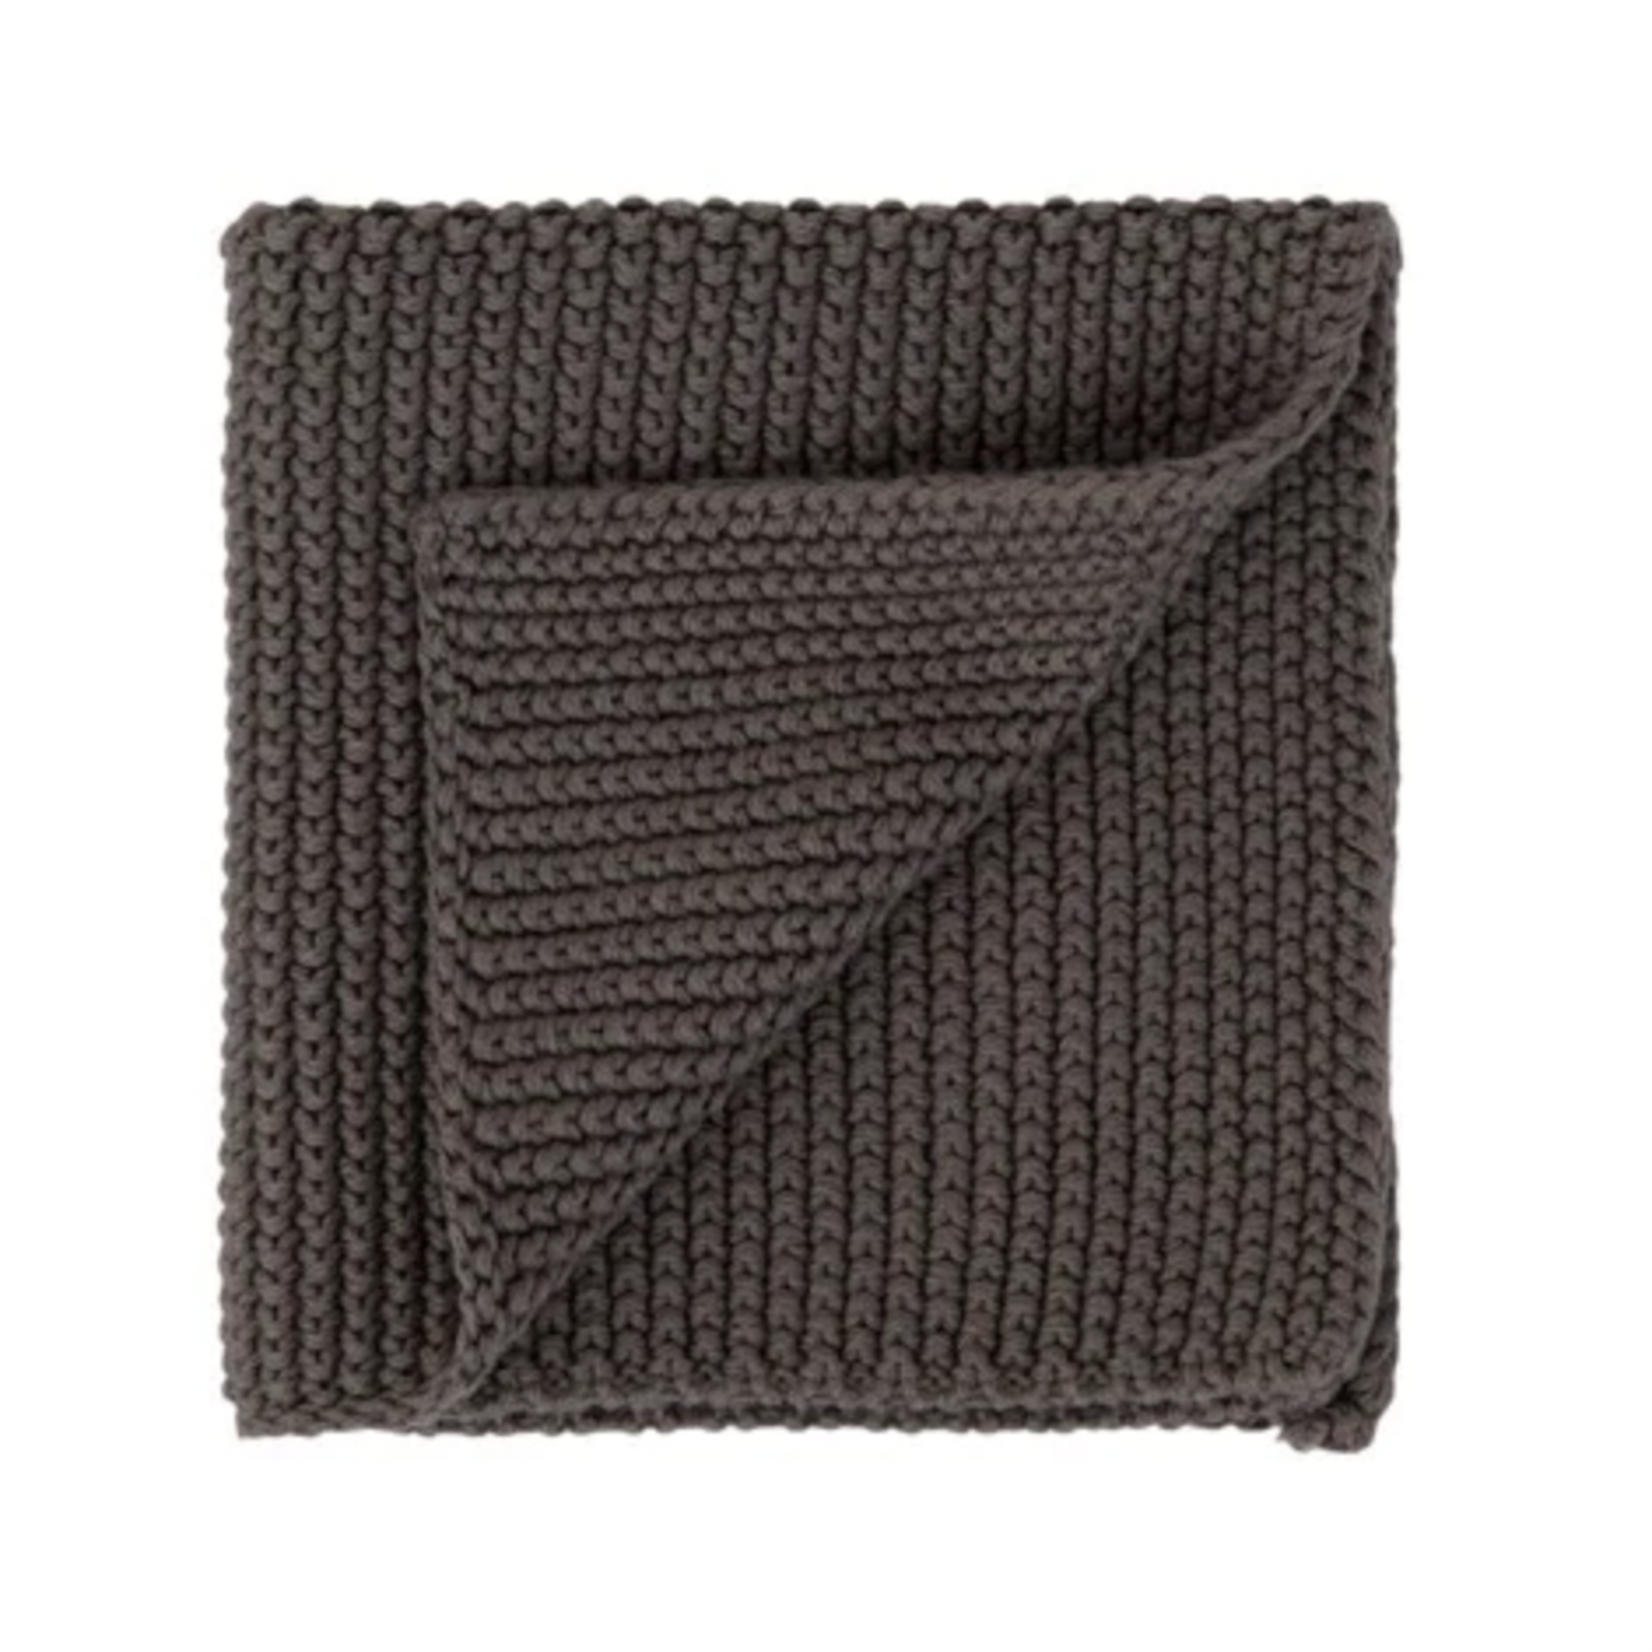 Cotton Knit Dish Cloth - Grey